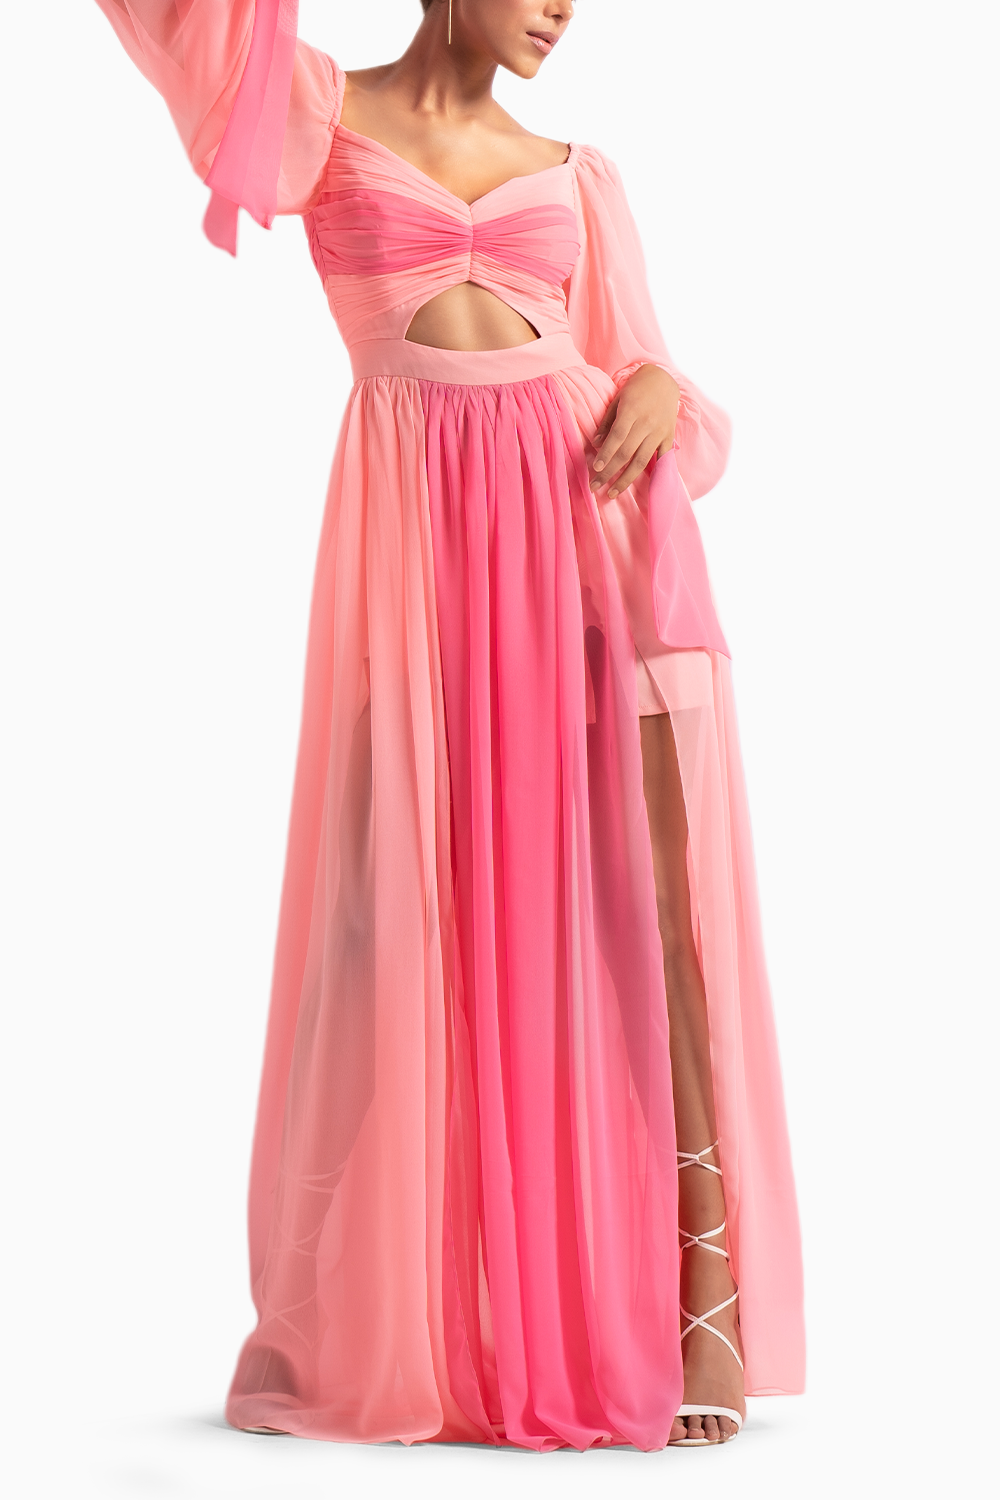 Fondant Pink Dress